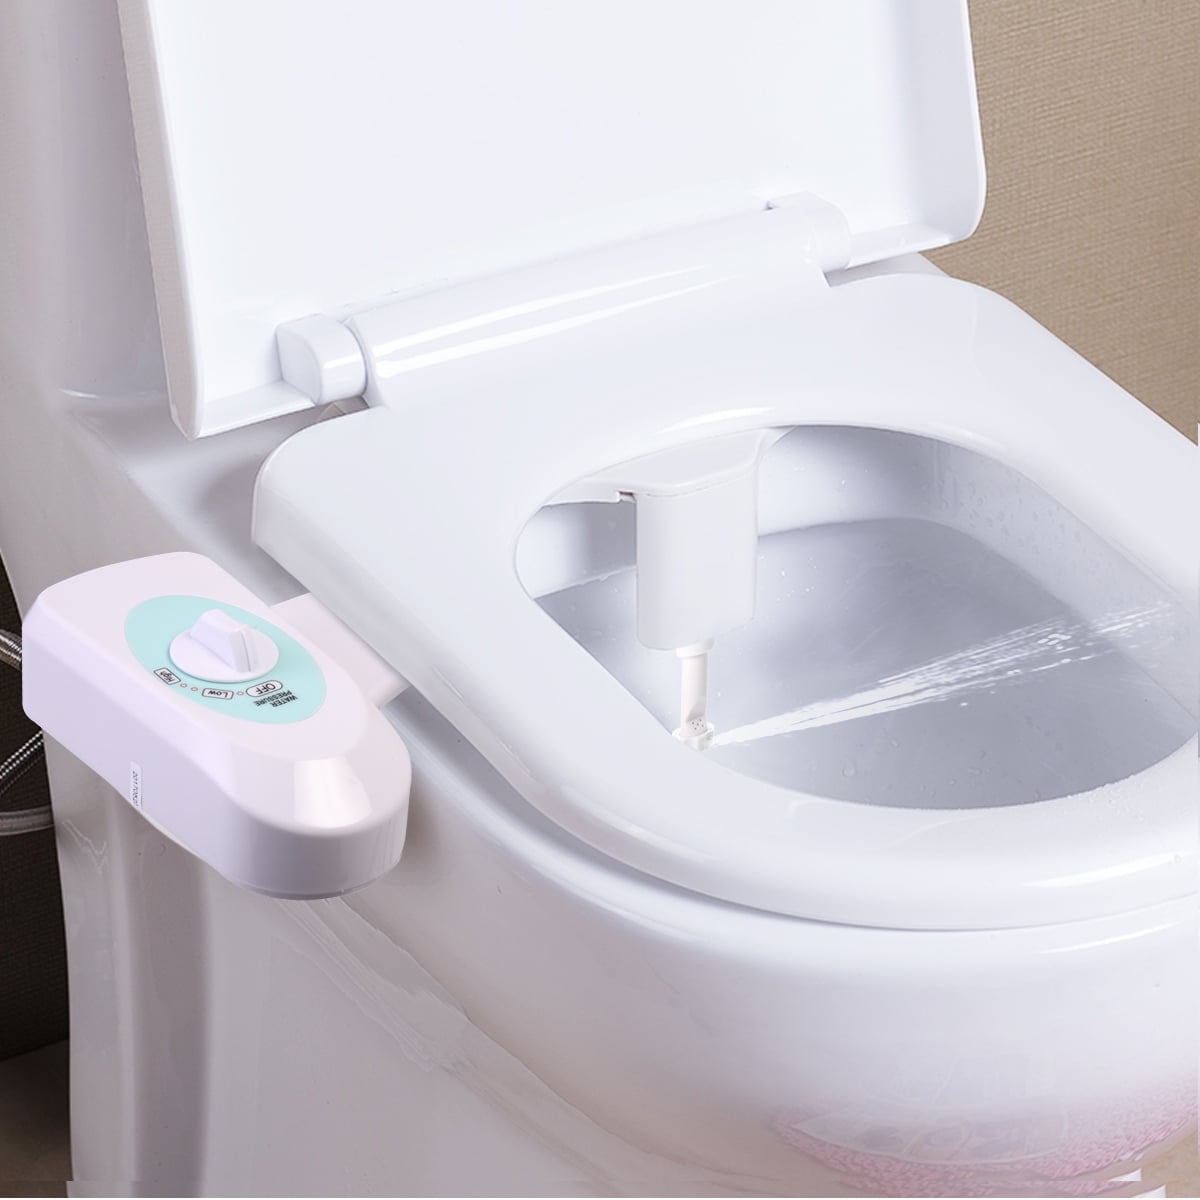 Fresh Water Spray Bathroom Non-Electric Mechanical Bidet Toilet Seat Attachment 